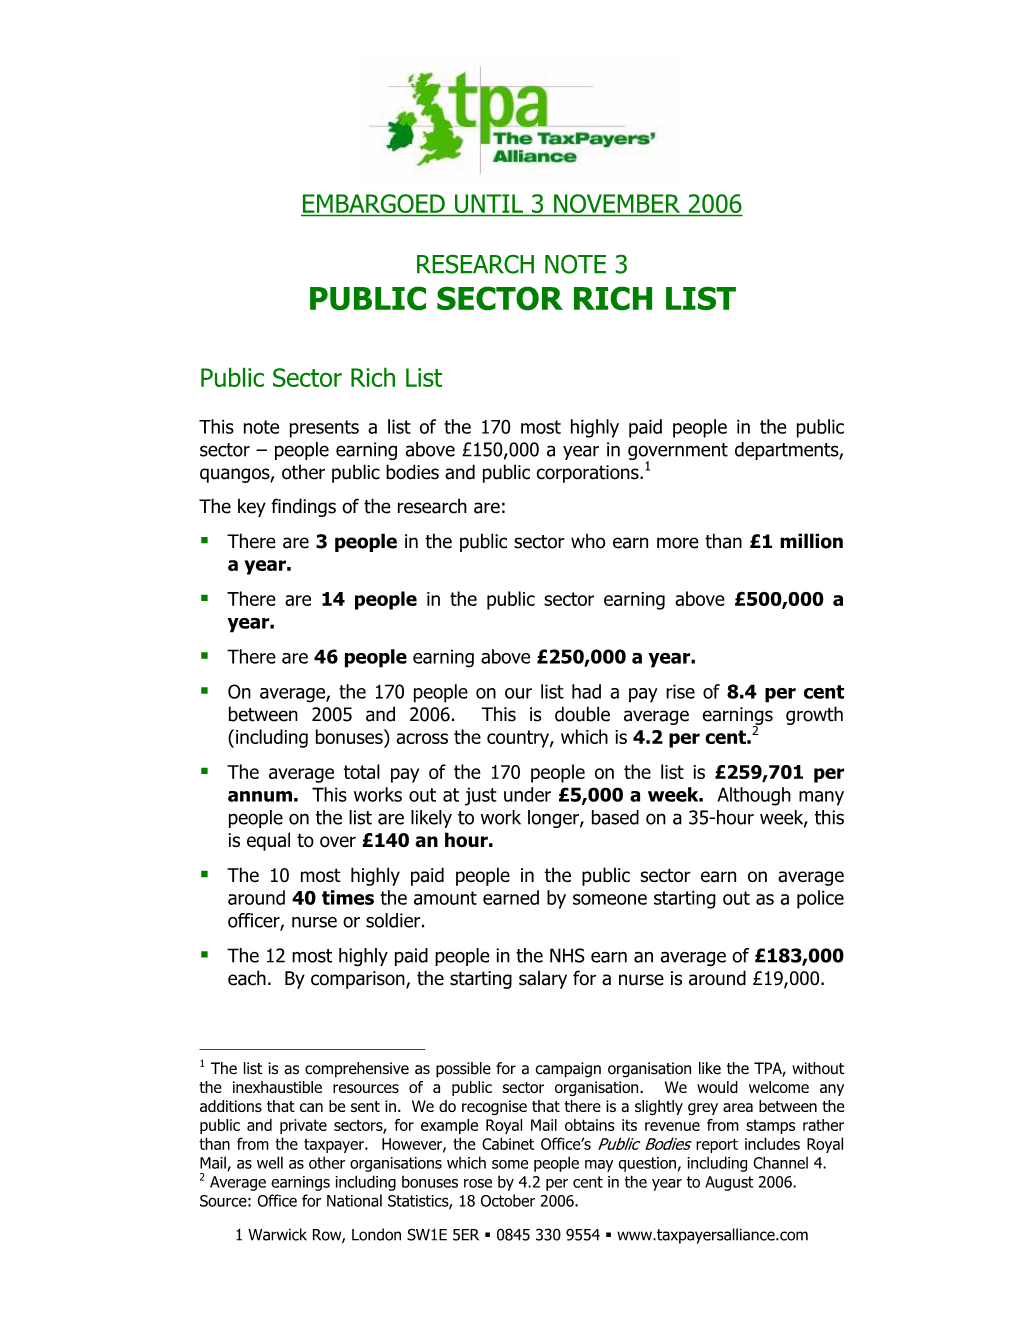 Public Sector Rich List